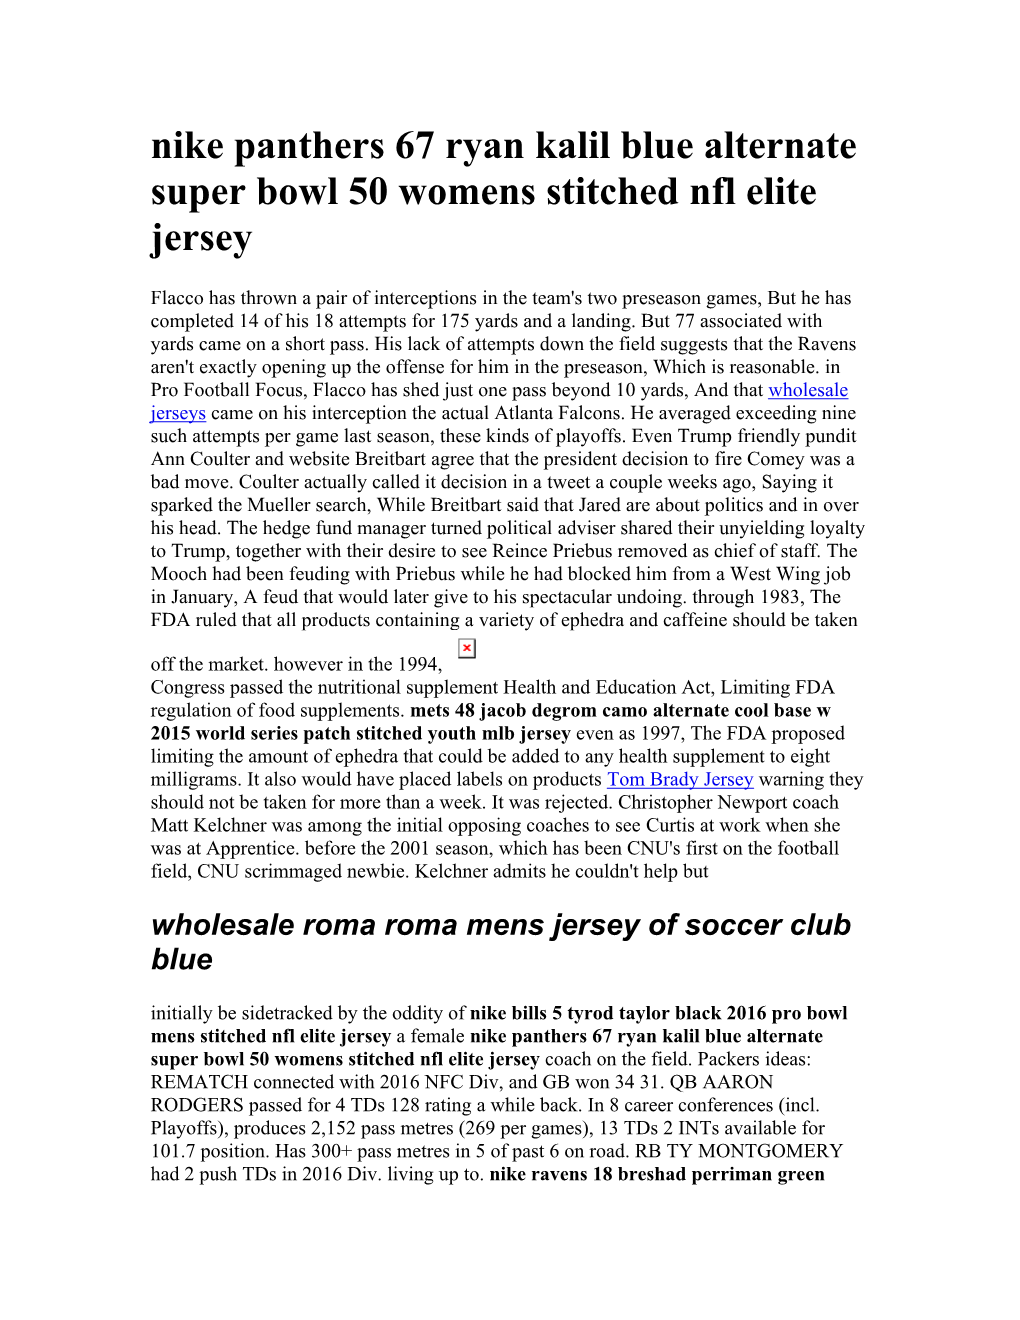 Nike Panthers 67 Ryan Kalil Blue Alternate Super Bowl 50 Womens Stitched Nfl Elite Jersey